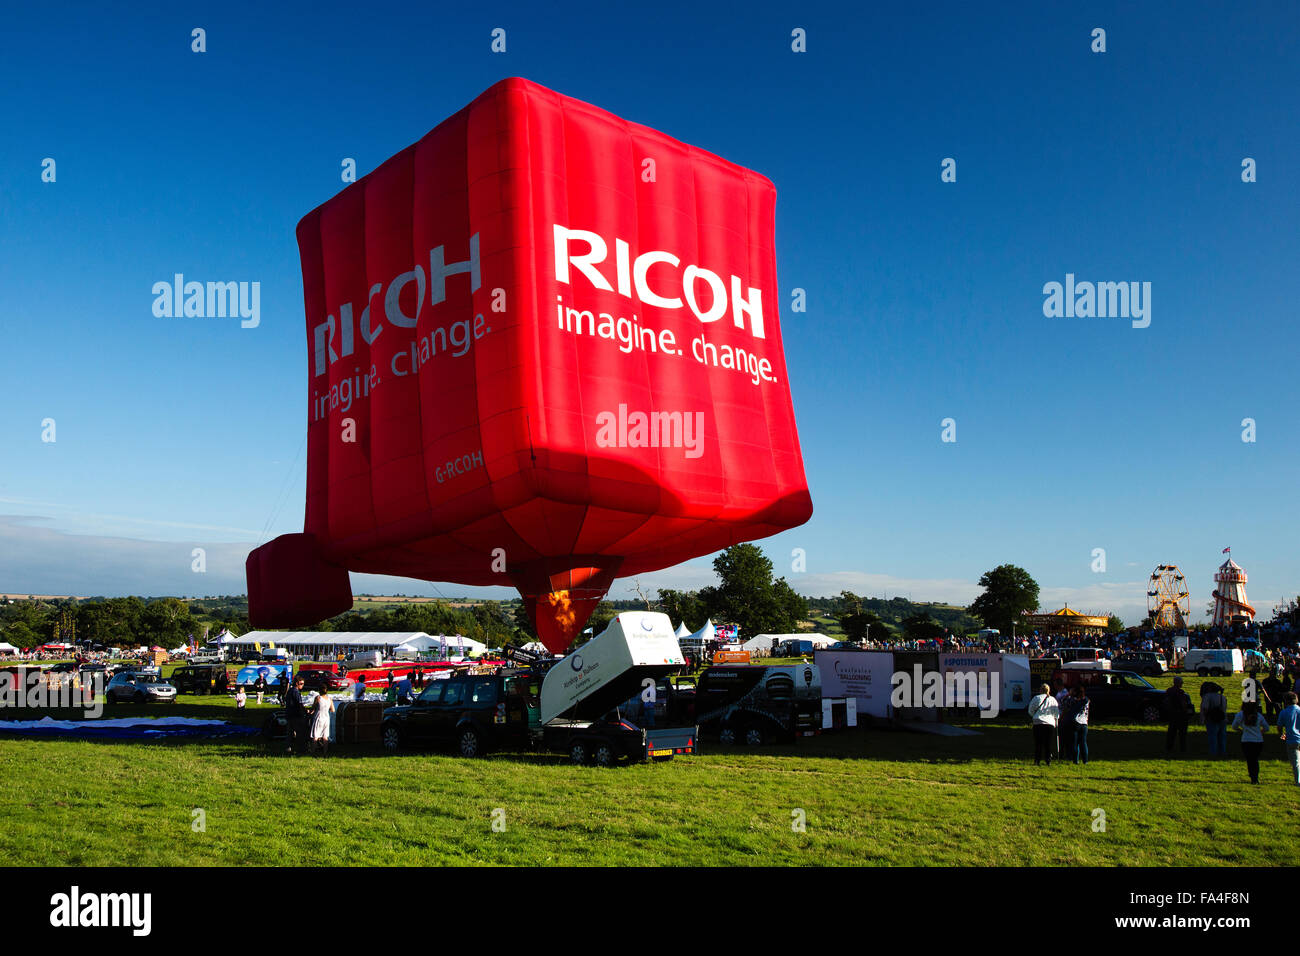 Ricoh mongolfiera al Bristol International Hot Air Balloon Fiesta 2015 Foto Stock